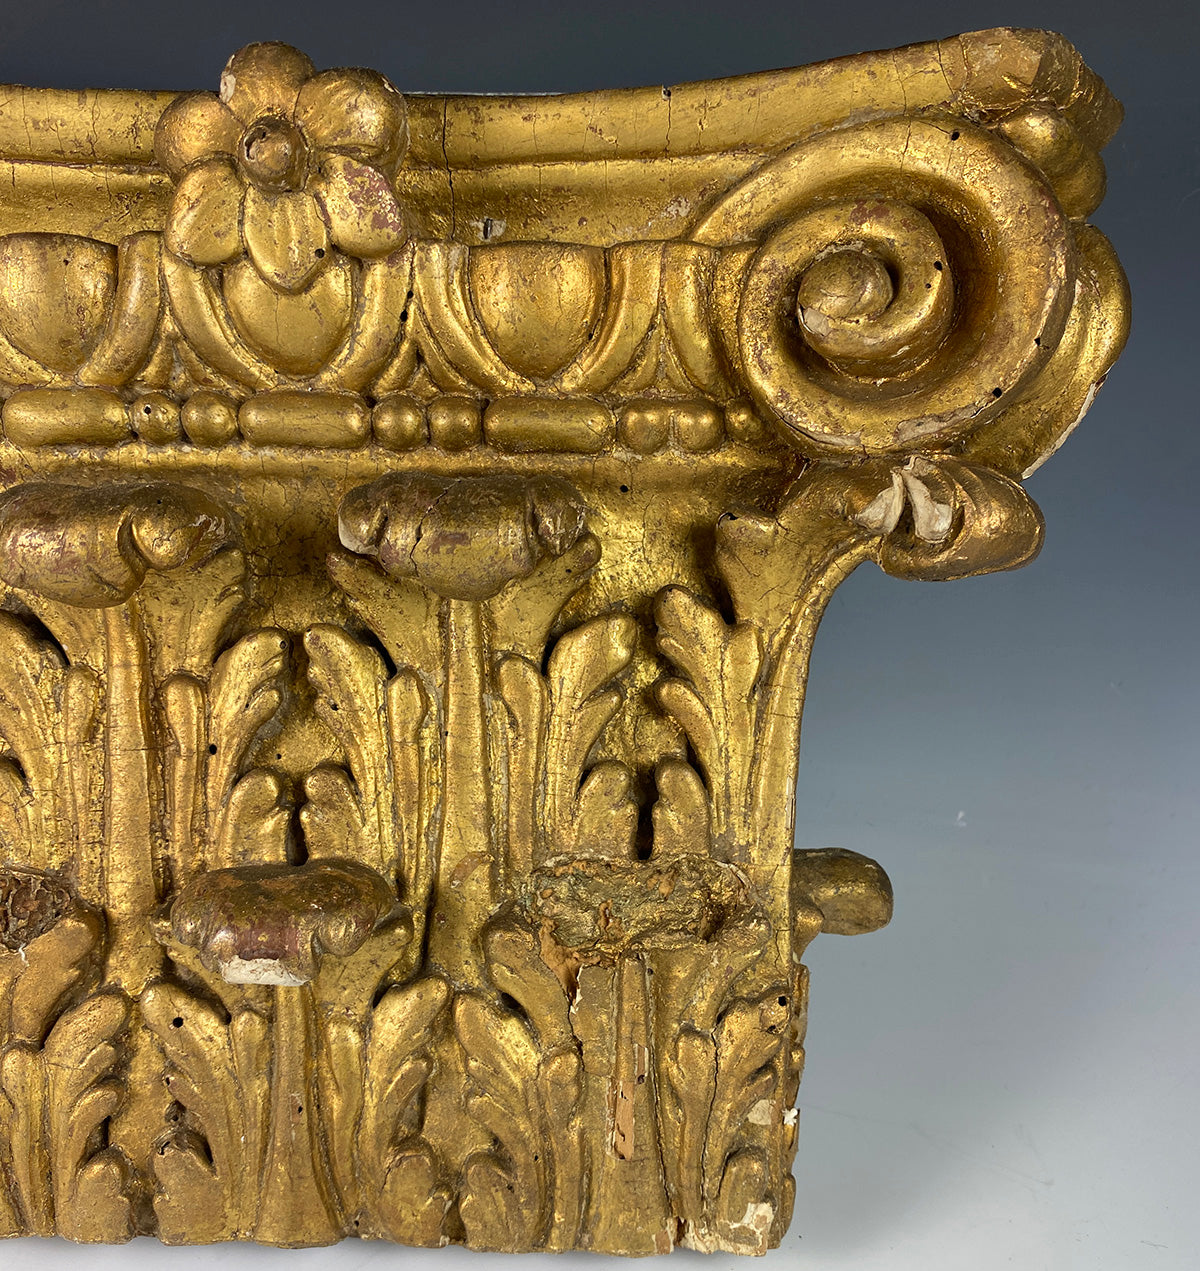 Antique Carved Wood Ornate Capital of a Corinthian Pillar Decoration, c.1700s